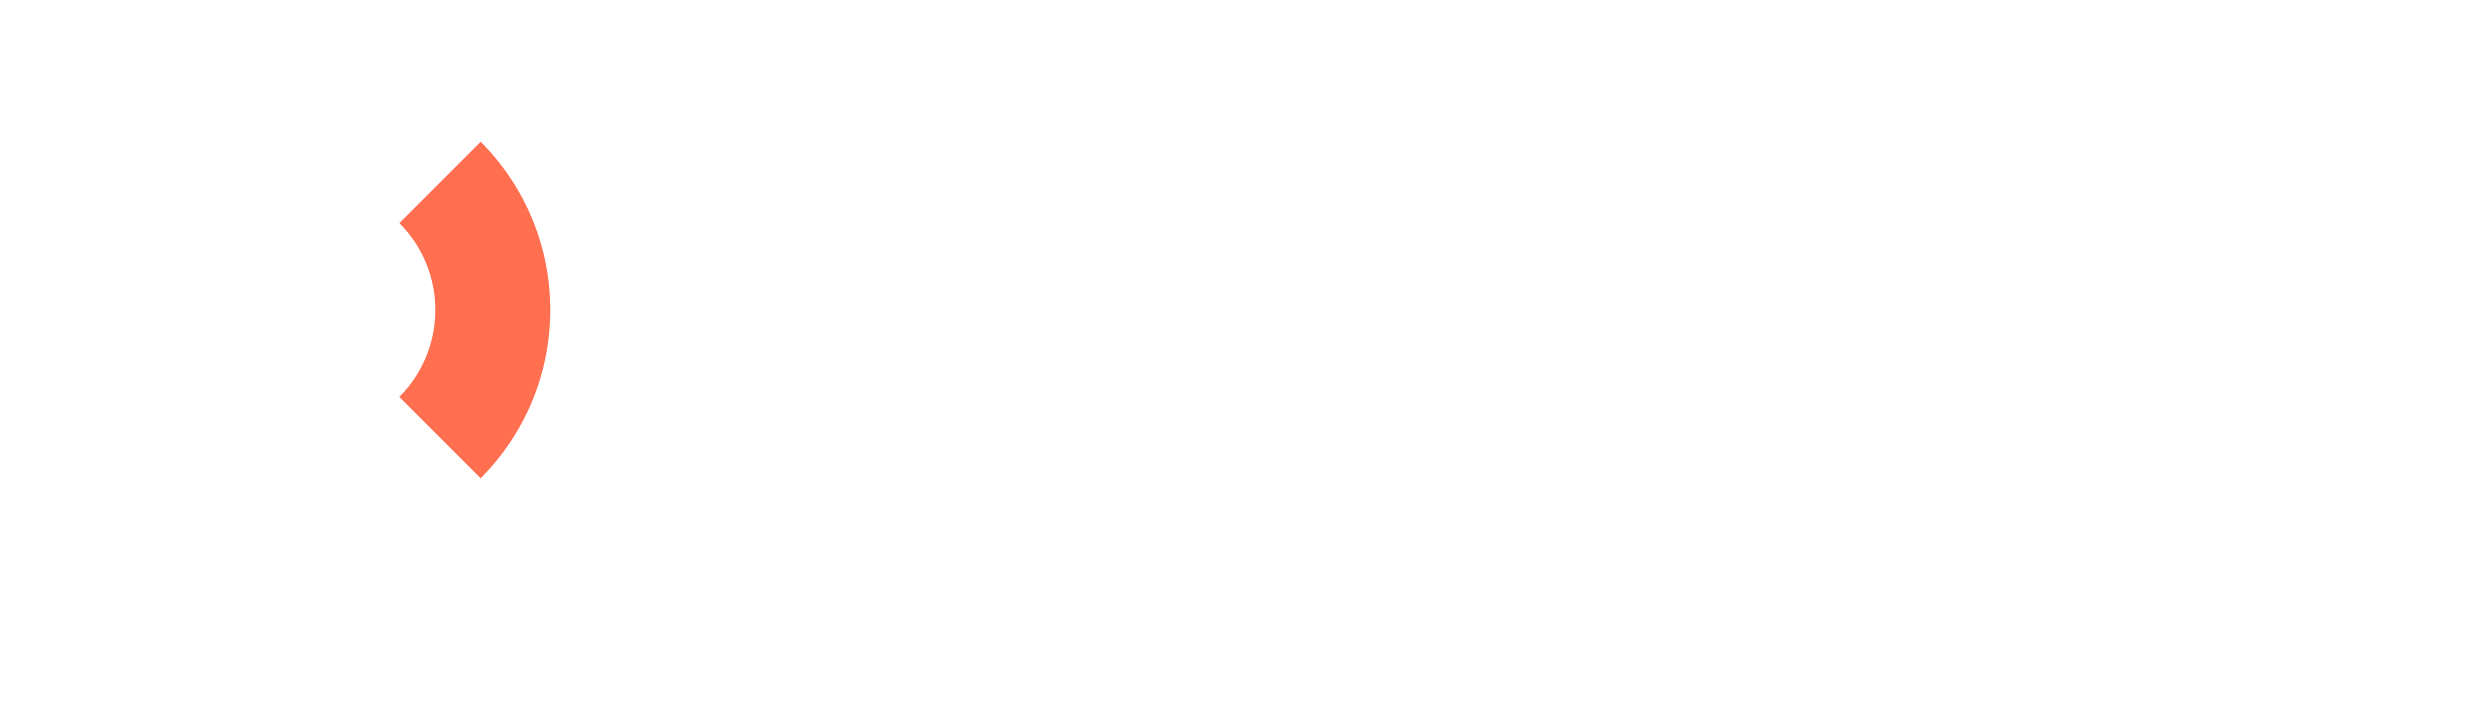 Color Navigator logo